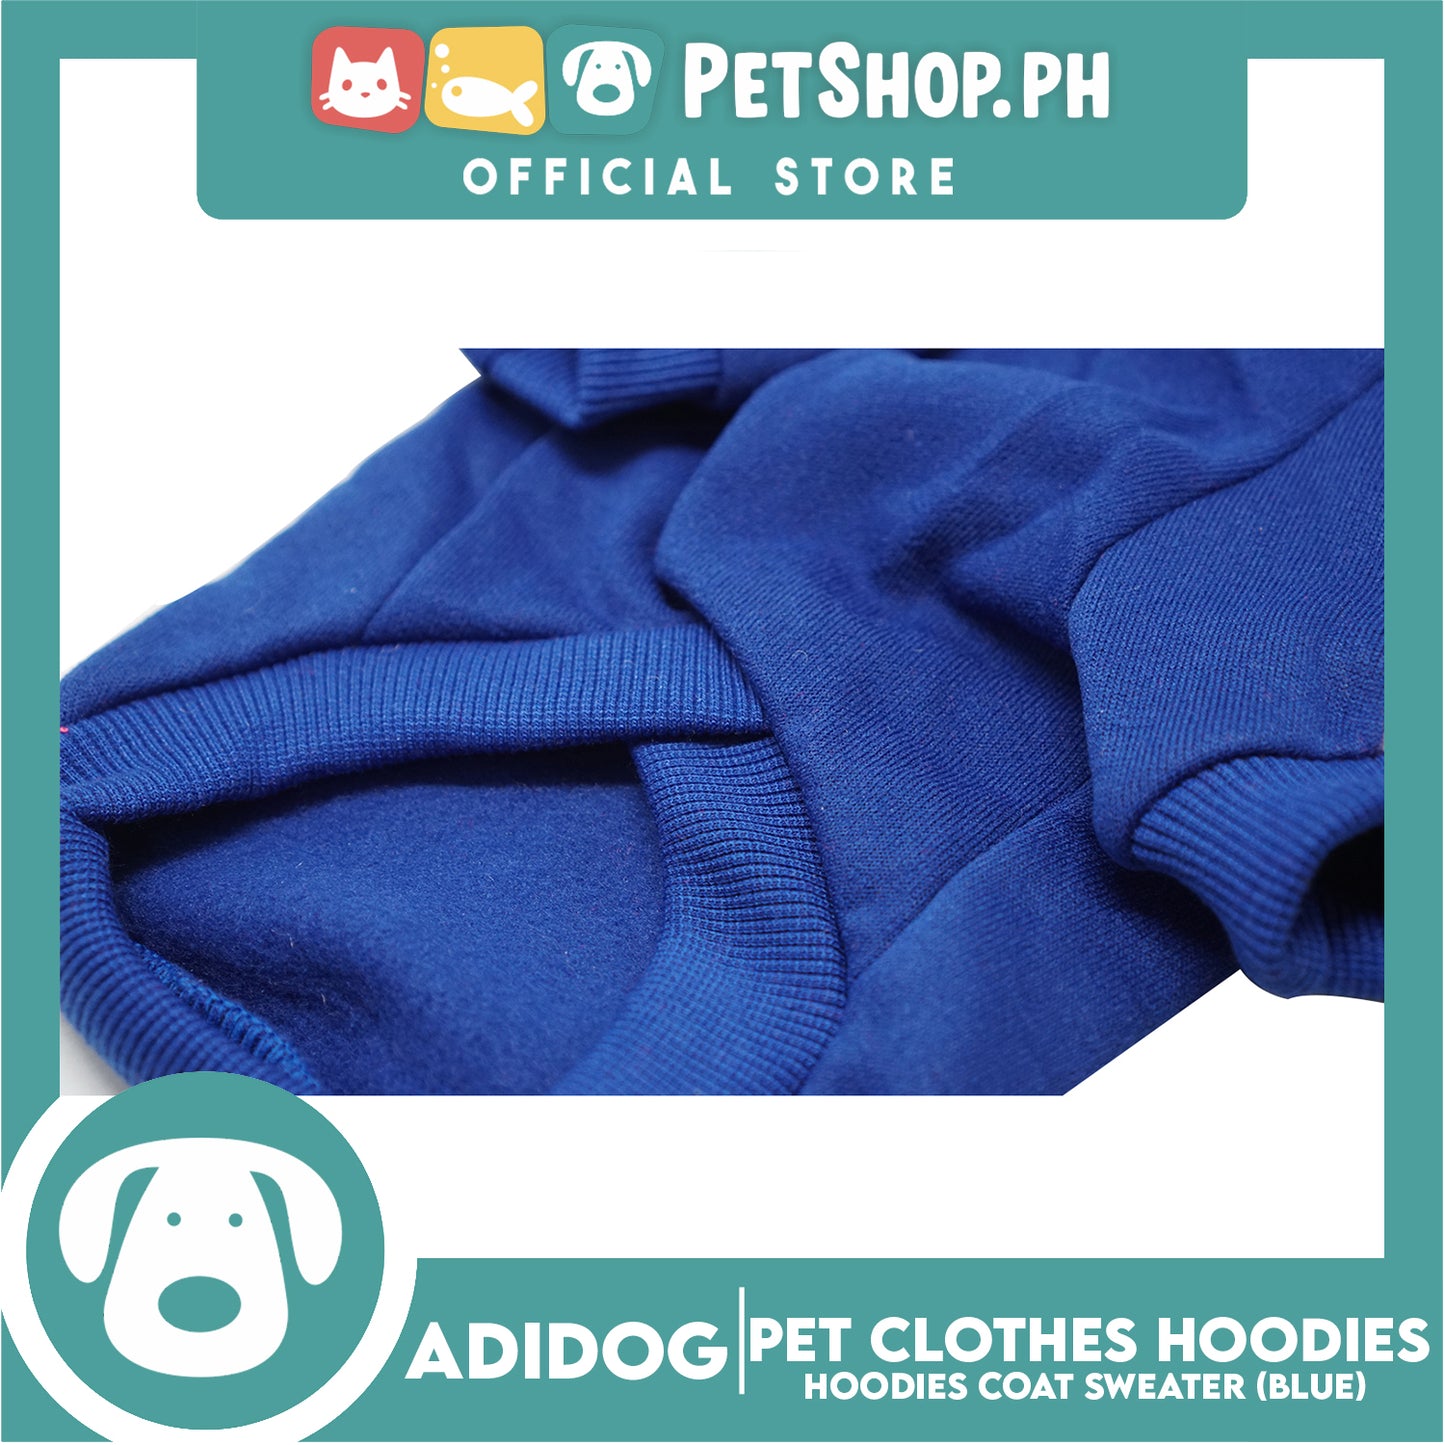 Adidog Pet Clothes Hoodies, Dog Winter Hoodies Apparel Puppy Cute Warm Hoodies Coat Sweater (Blue)  Large